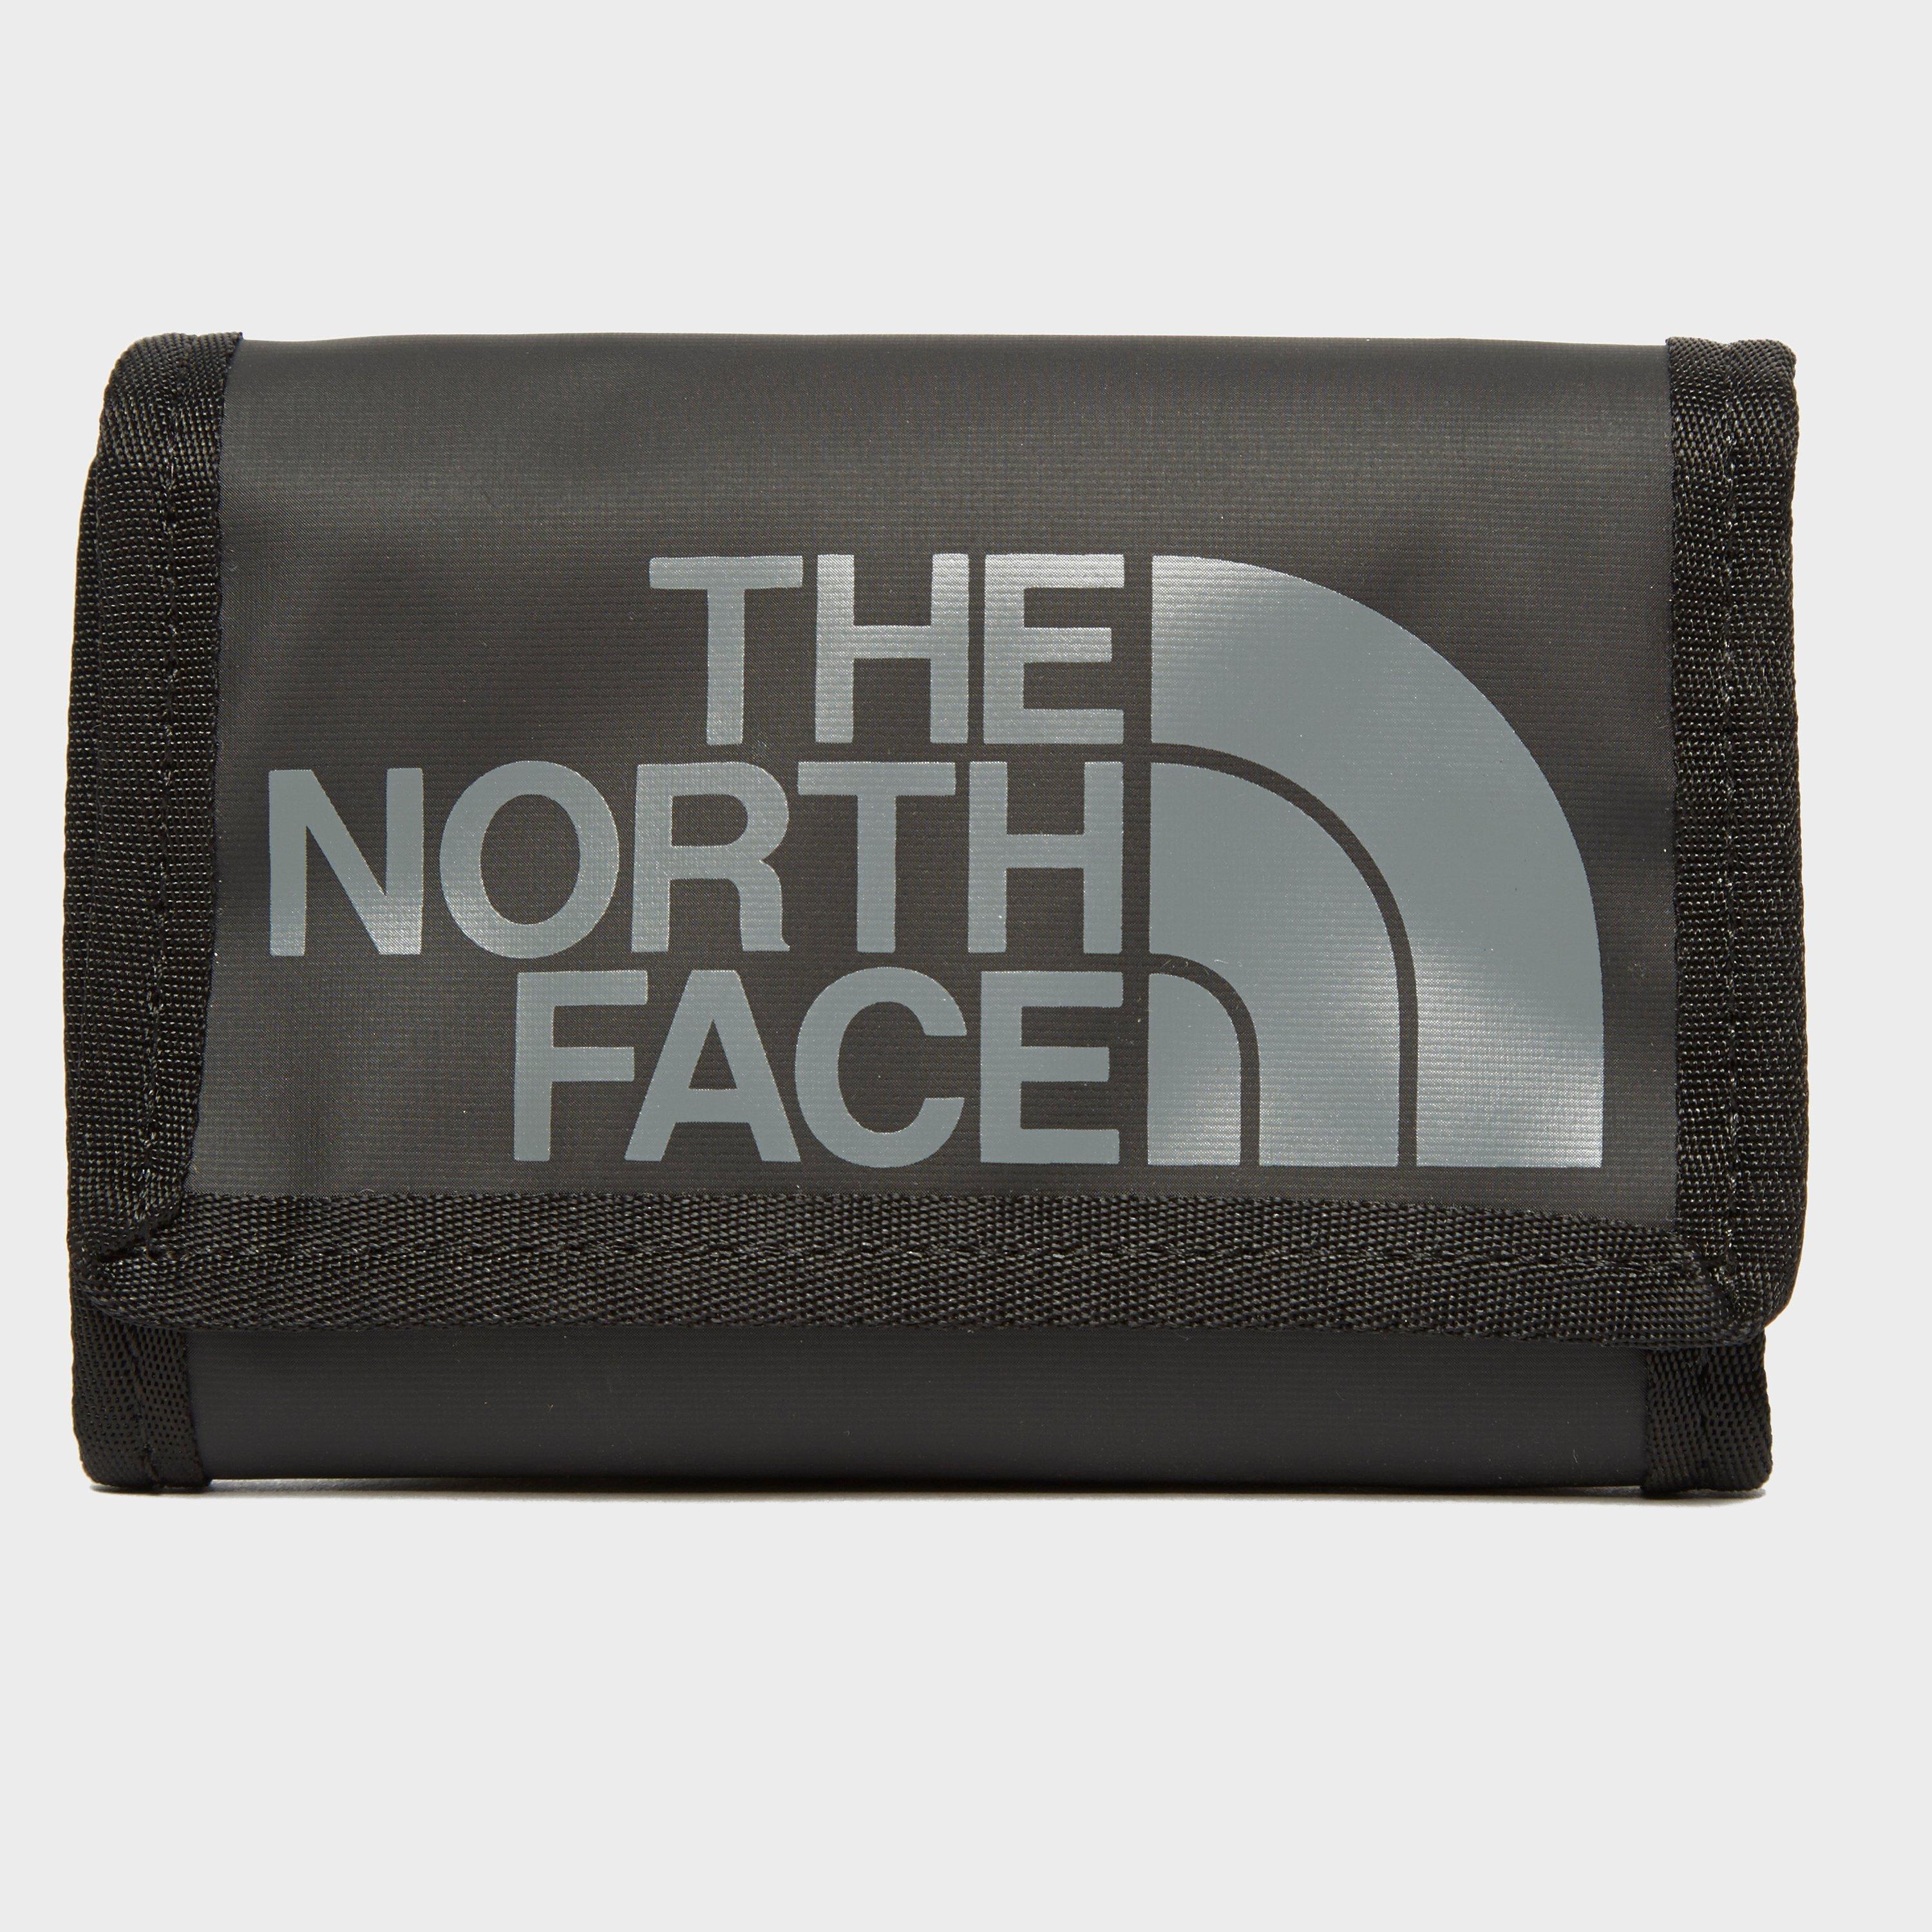 north face wallets uk